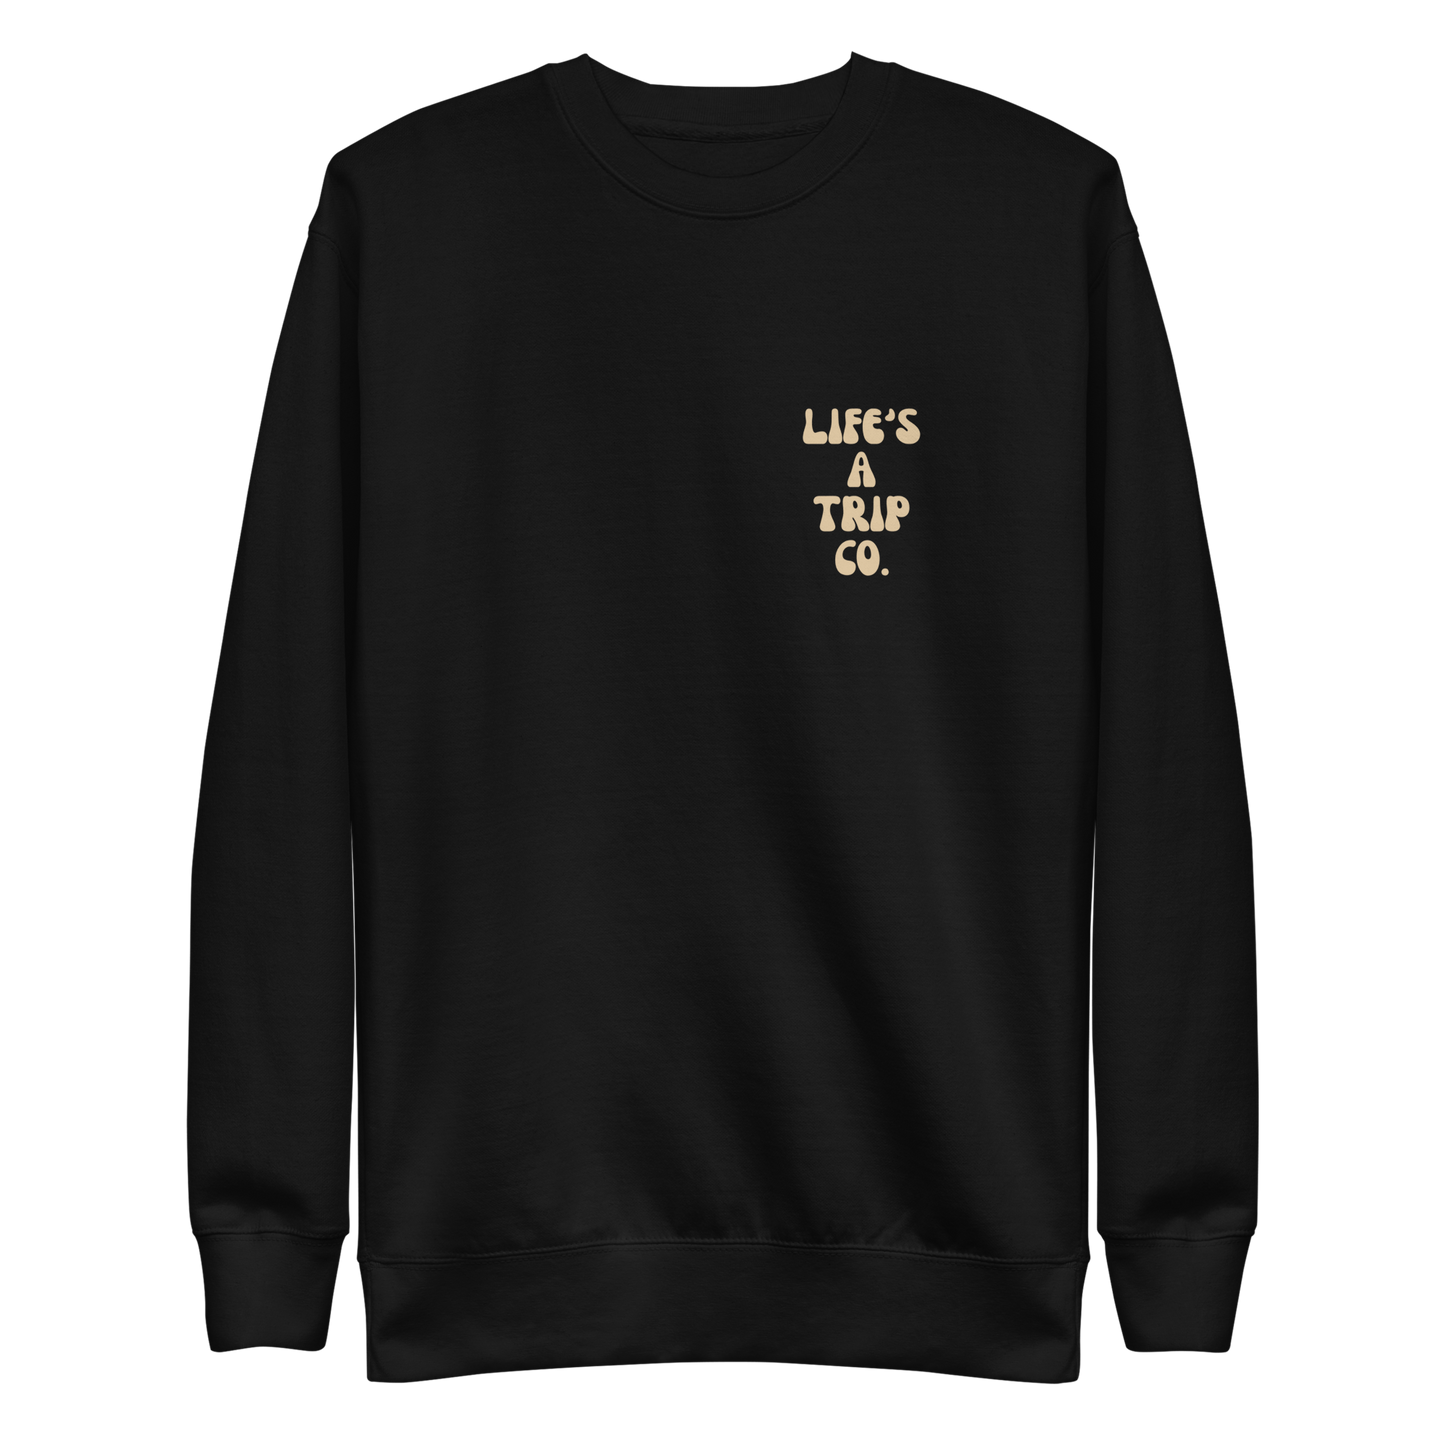 Life's a Trip Co.™ Cotton Heritage 2480 Premium Sweatshirt Front / Back